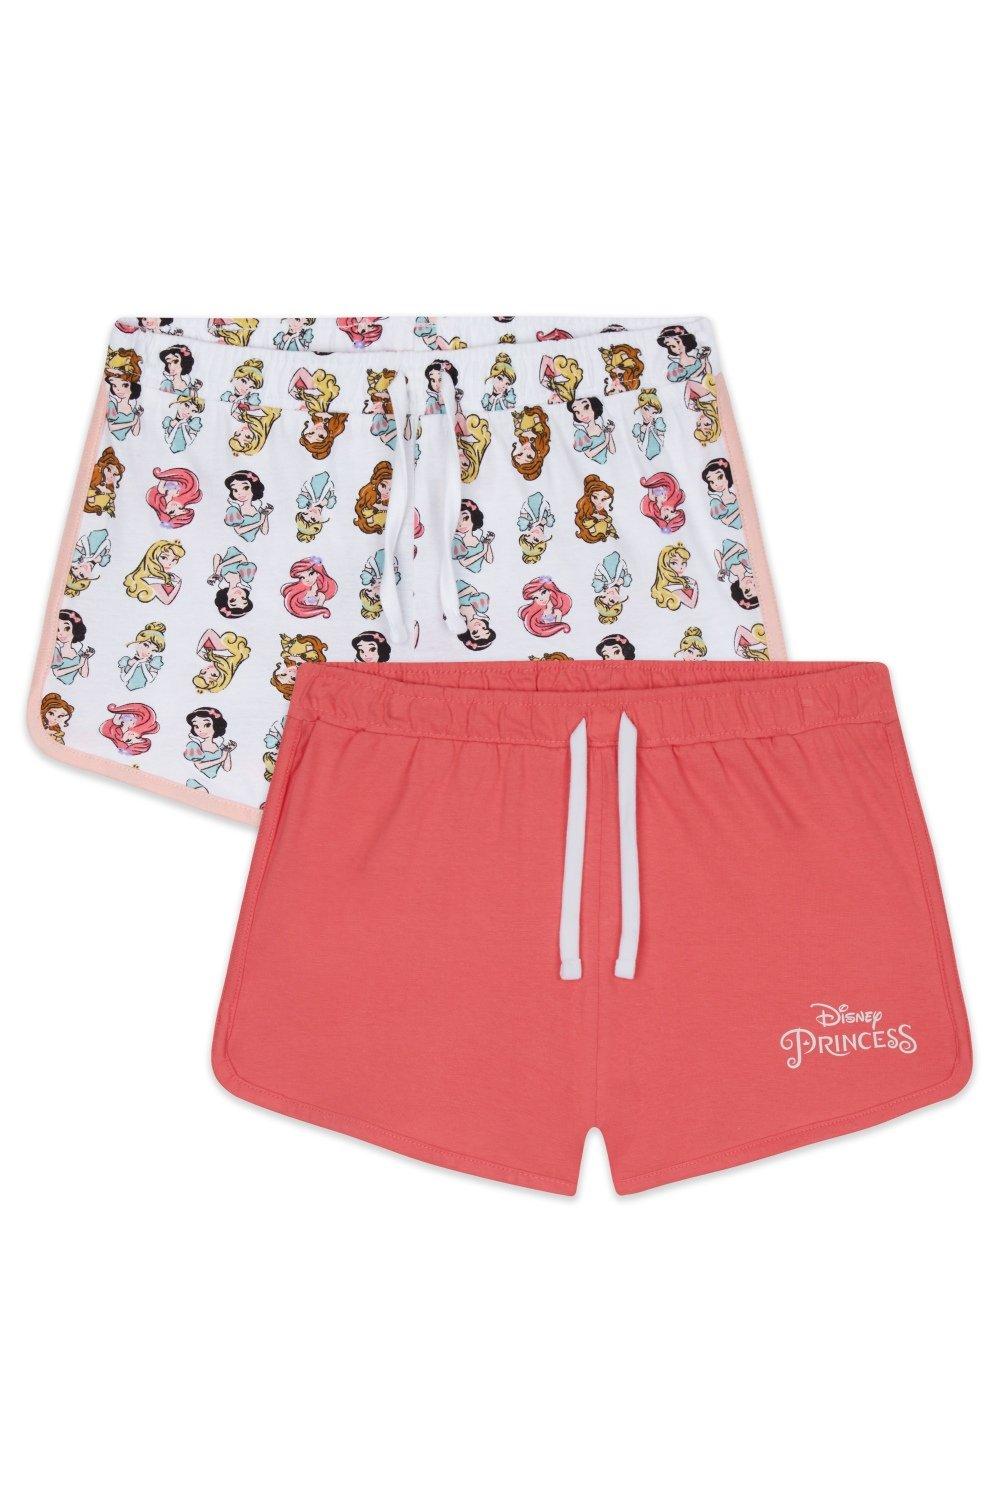 Комплект из 2 шорт «Принцесса» Disney, мультиколор набор disney princess набор без куклы b5309